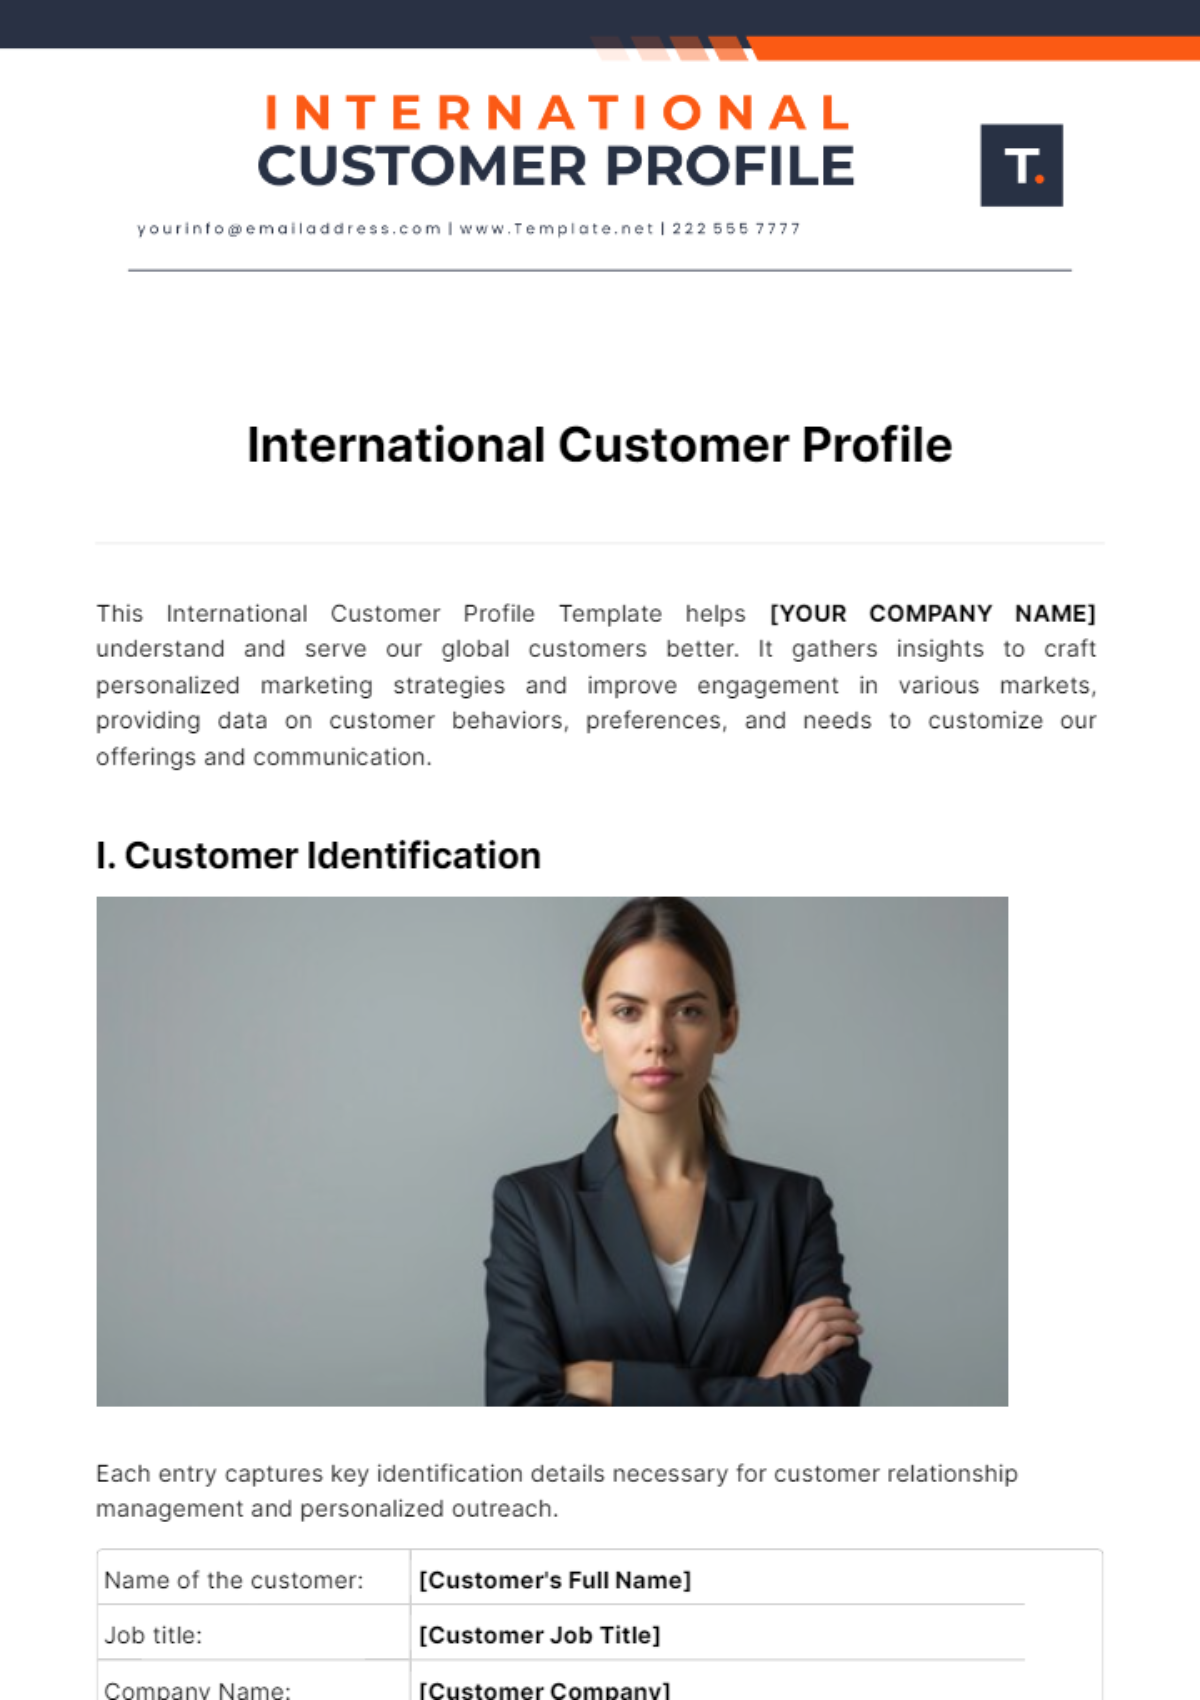 International Customer Profile Template